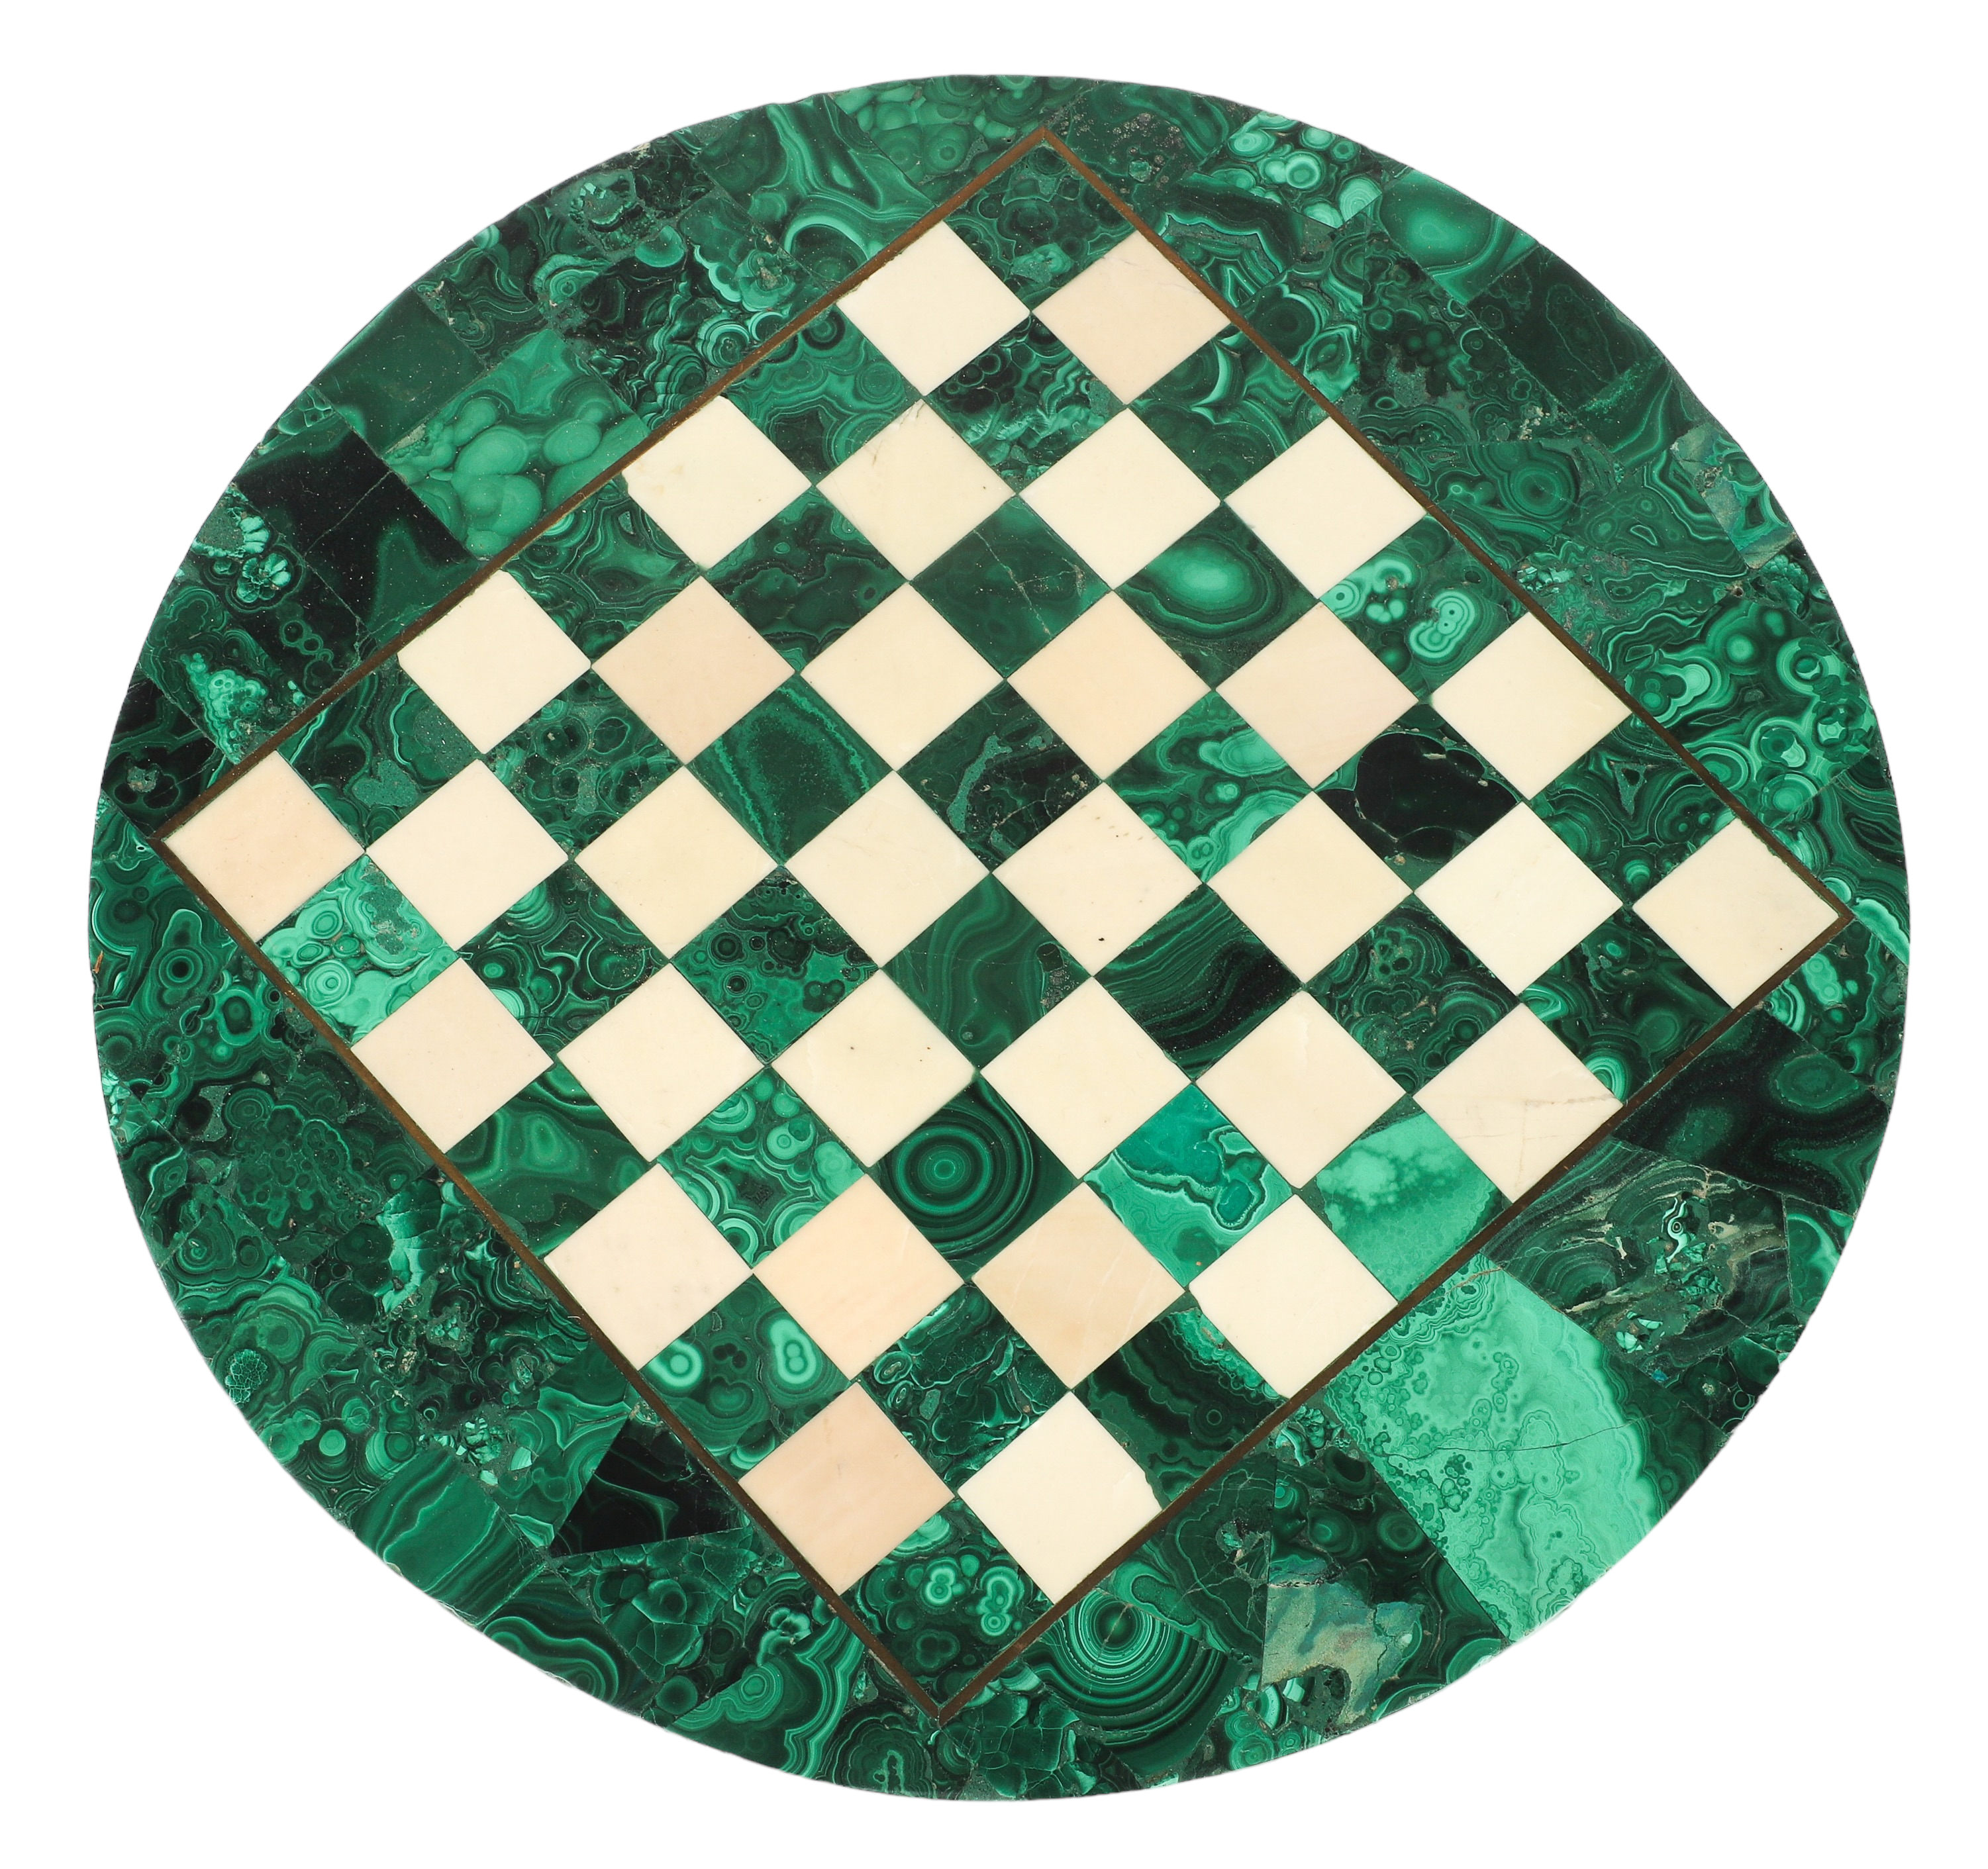 Stone checkers chess game board  3b1a99